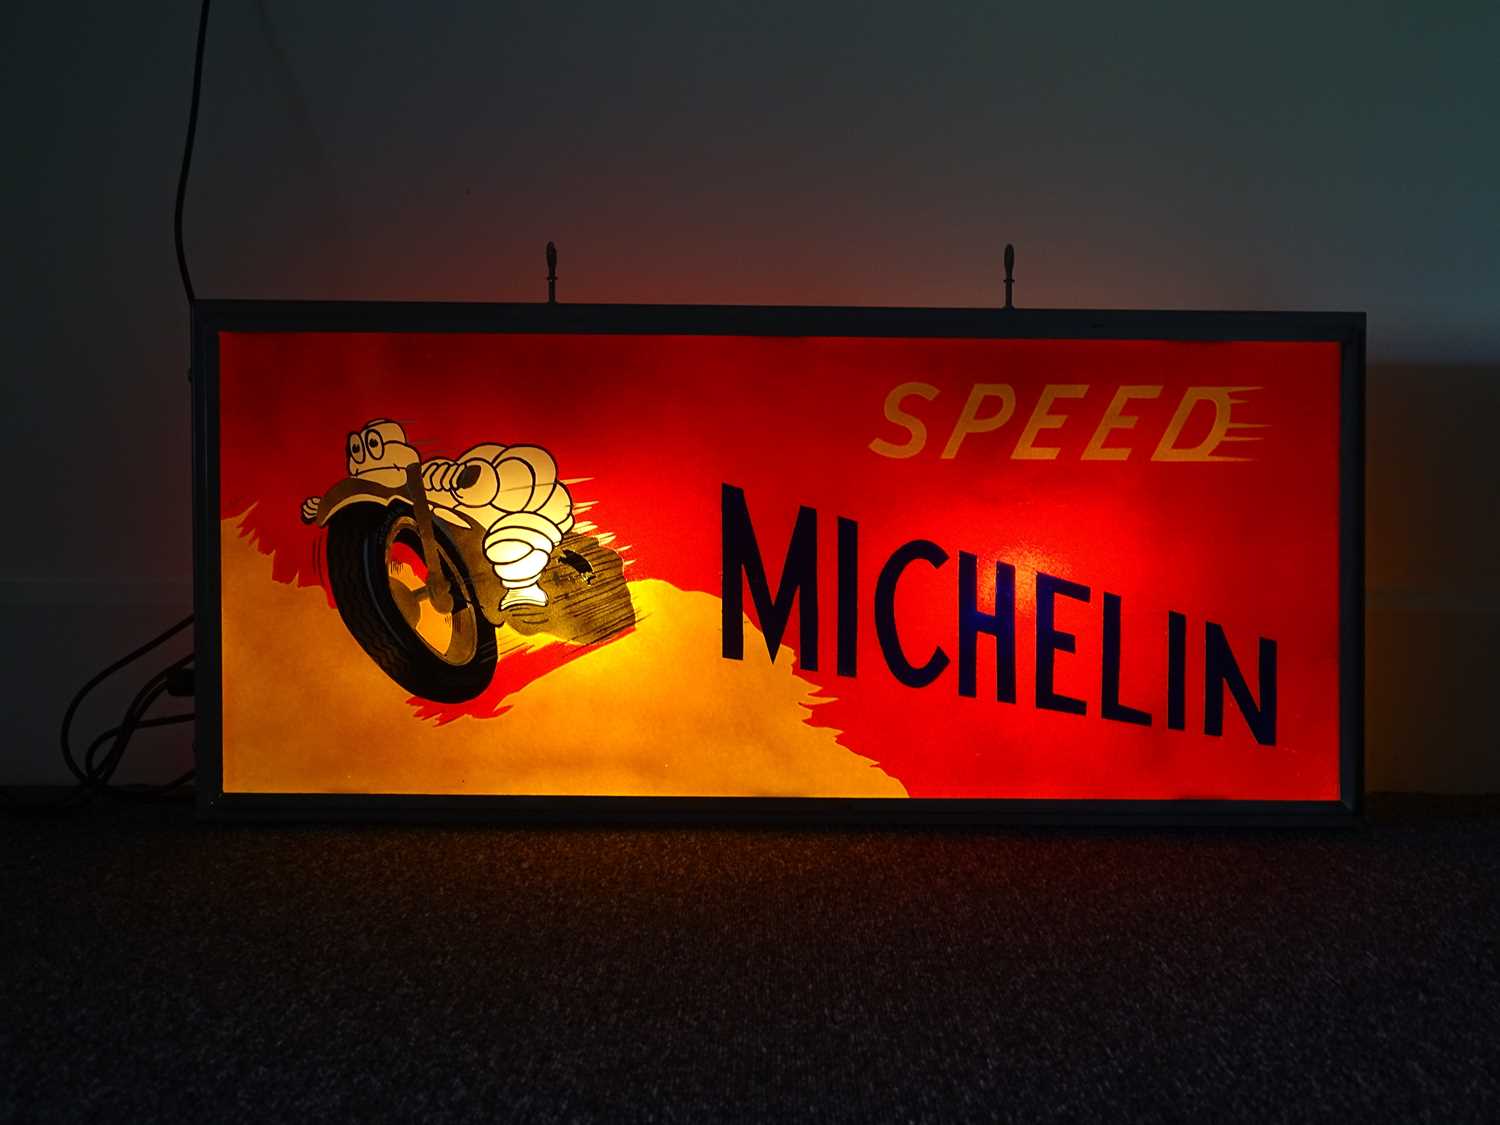 Lot 29 - Representation Michelin Speed light box.